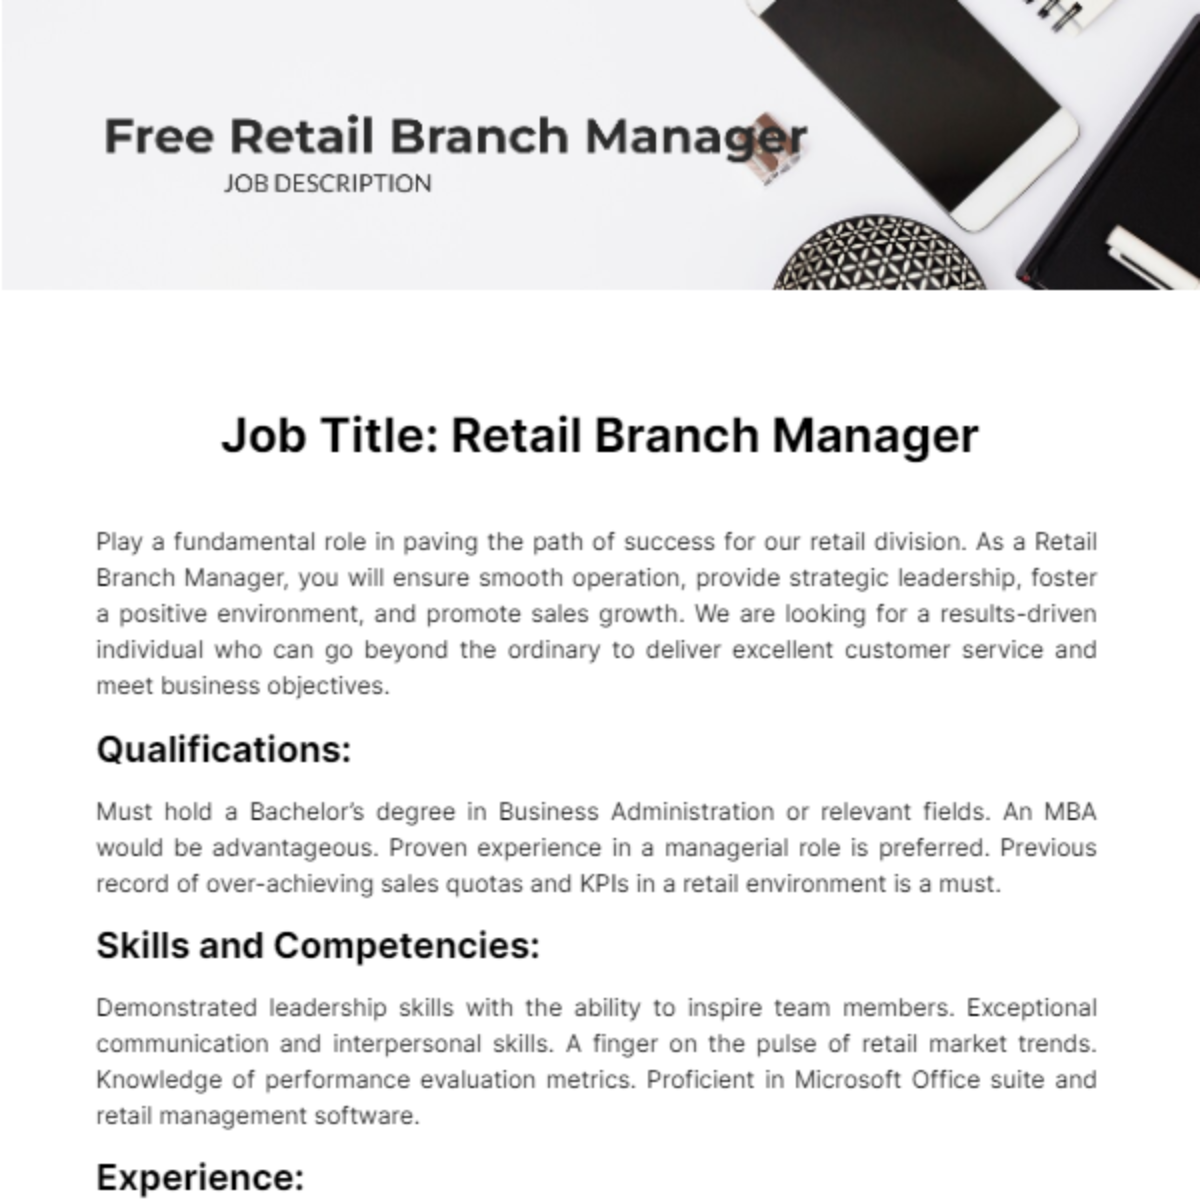 Free Retail Branch Manager Job Description Template